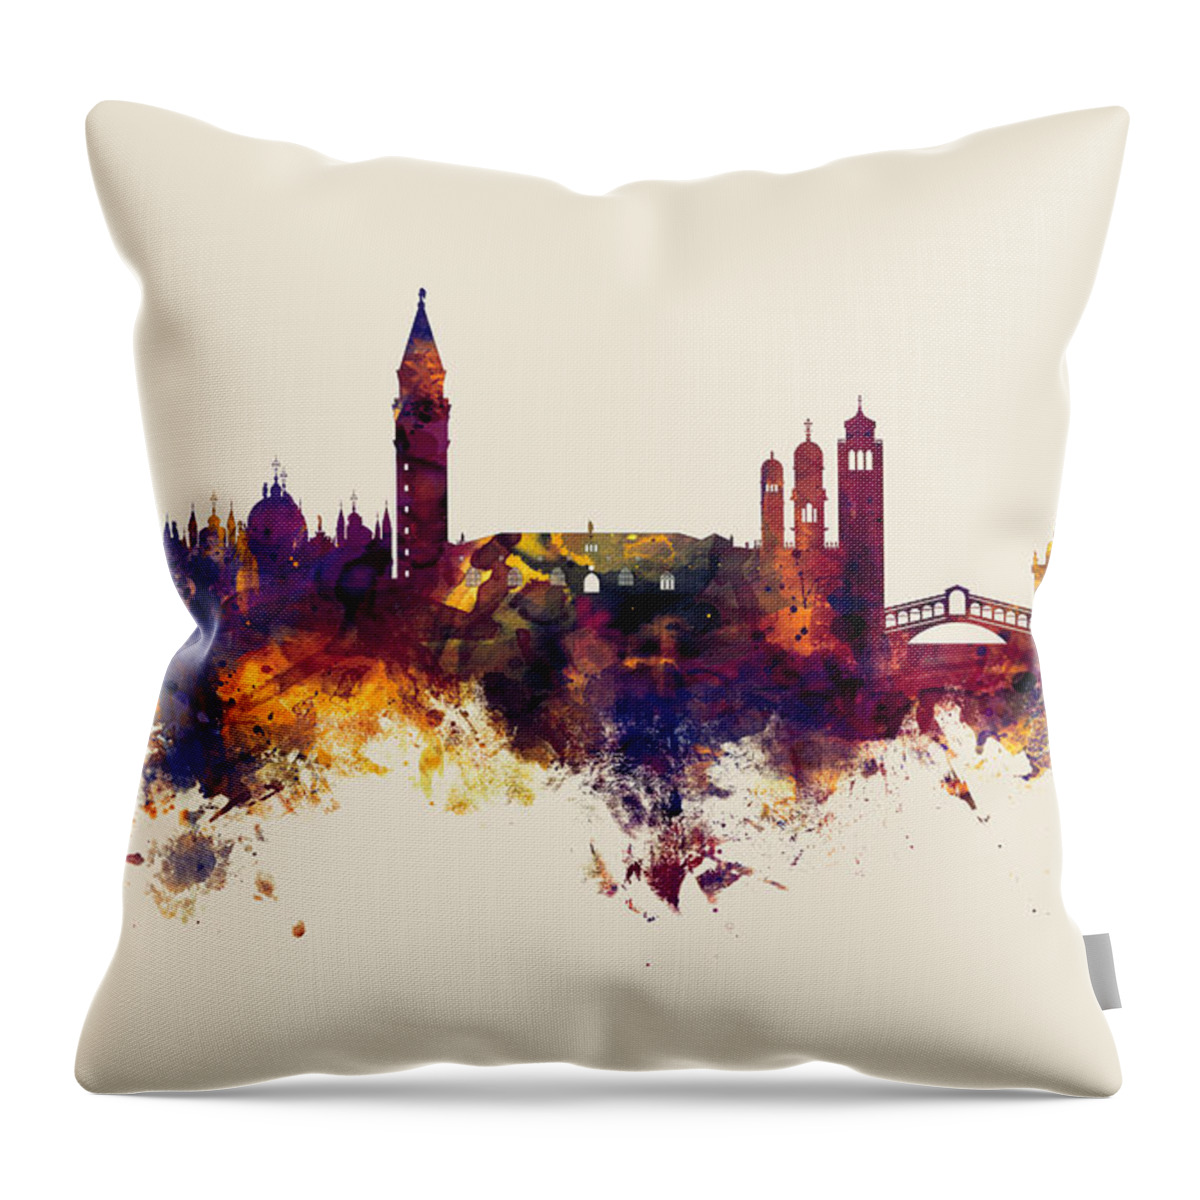 Italy Throw Pillow featuring the digital art Venice Italy Skyline by Michael Tompsett